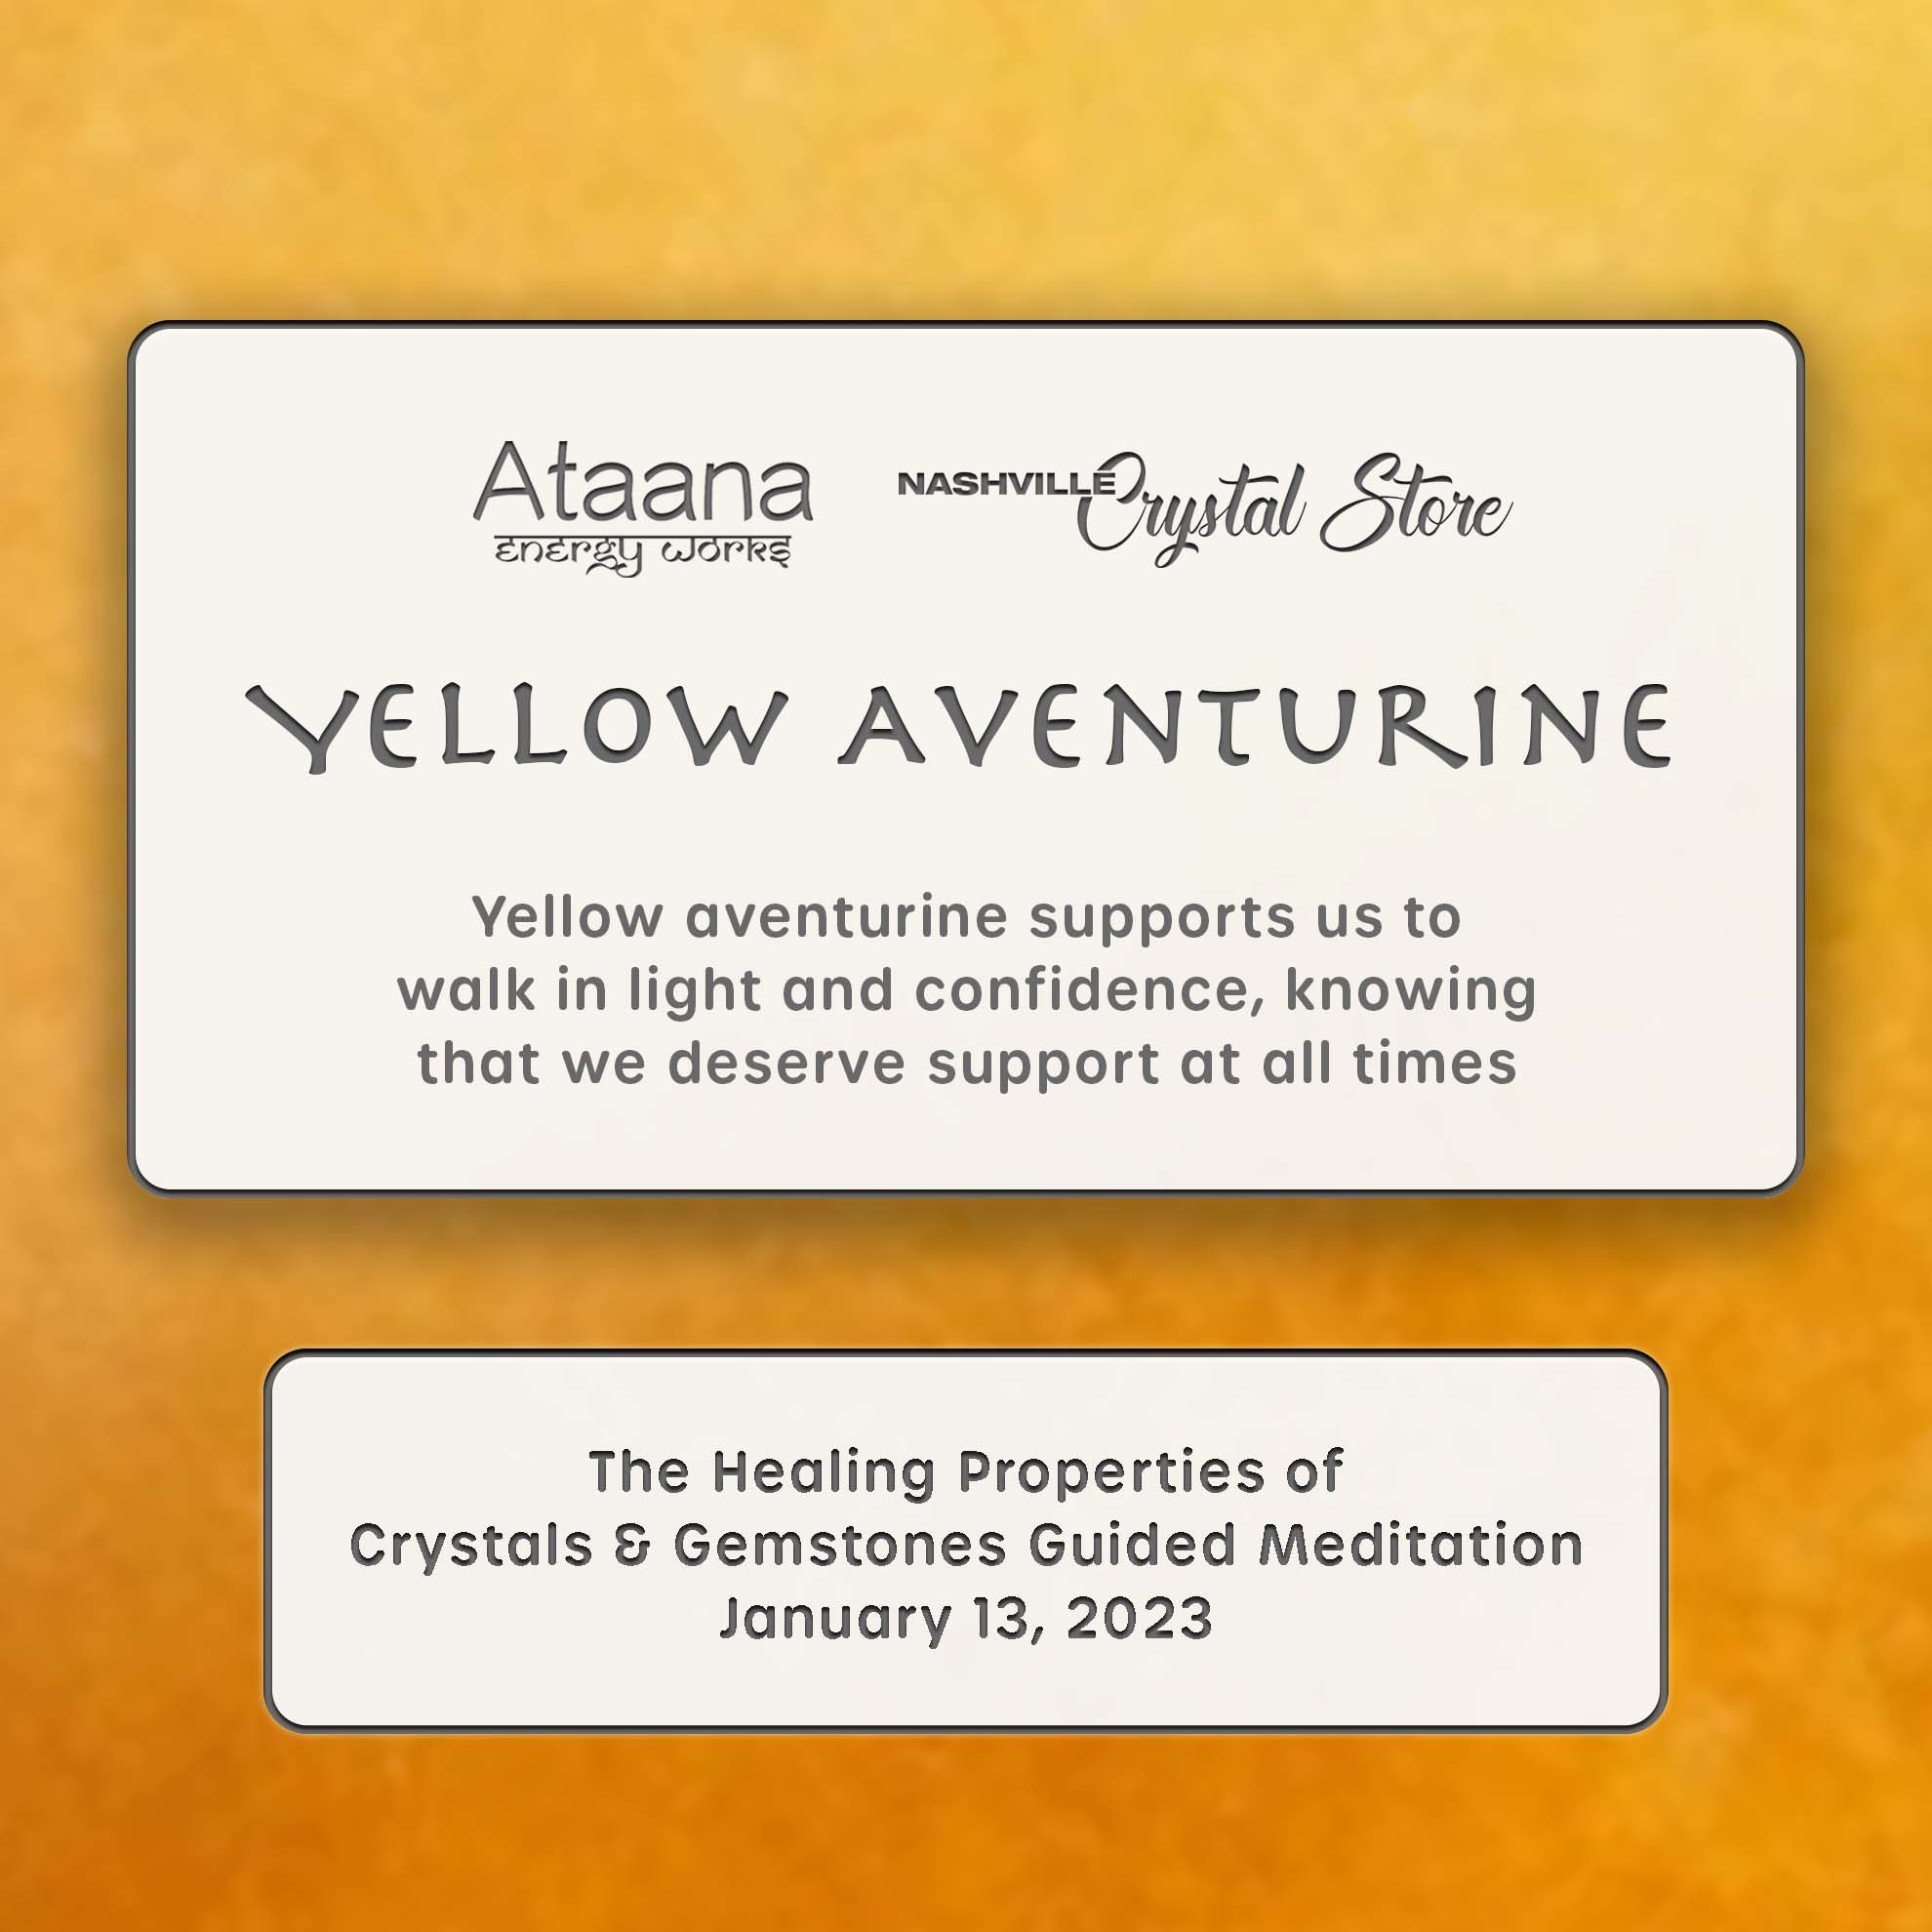 Ataana Method Nashville Crystal Store Yellow Aventurine Guided Meditation